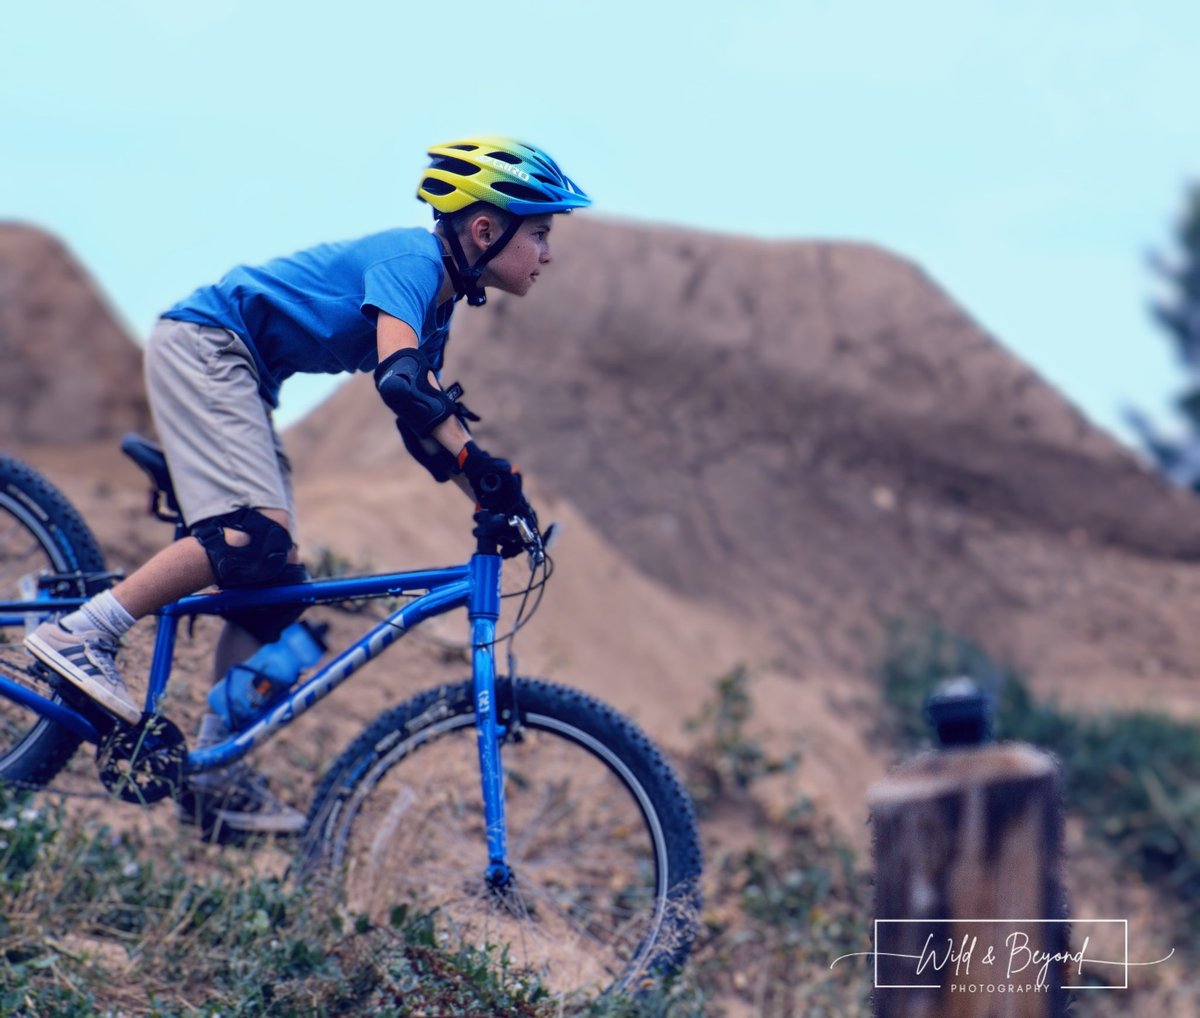 Dialed in & determined 😎
***
#mountainbiking #photography #valmont #biking #bikepark #riding #wildandbeyondphotography